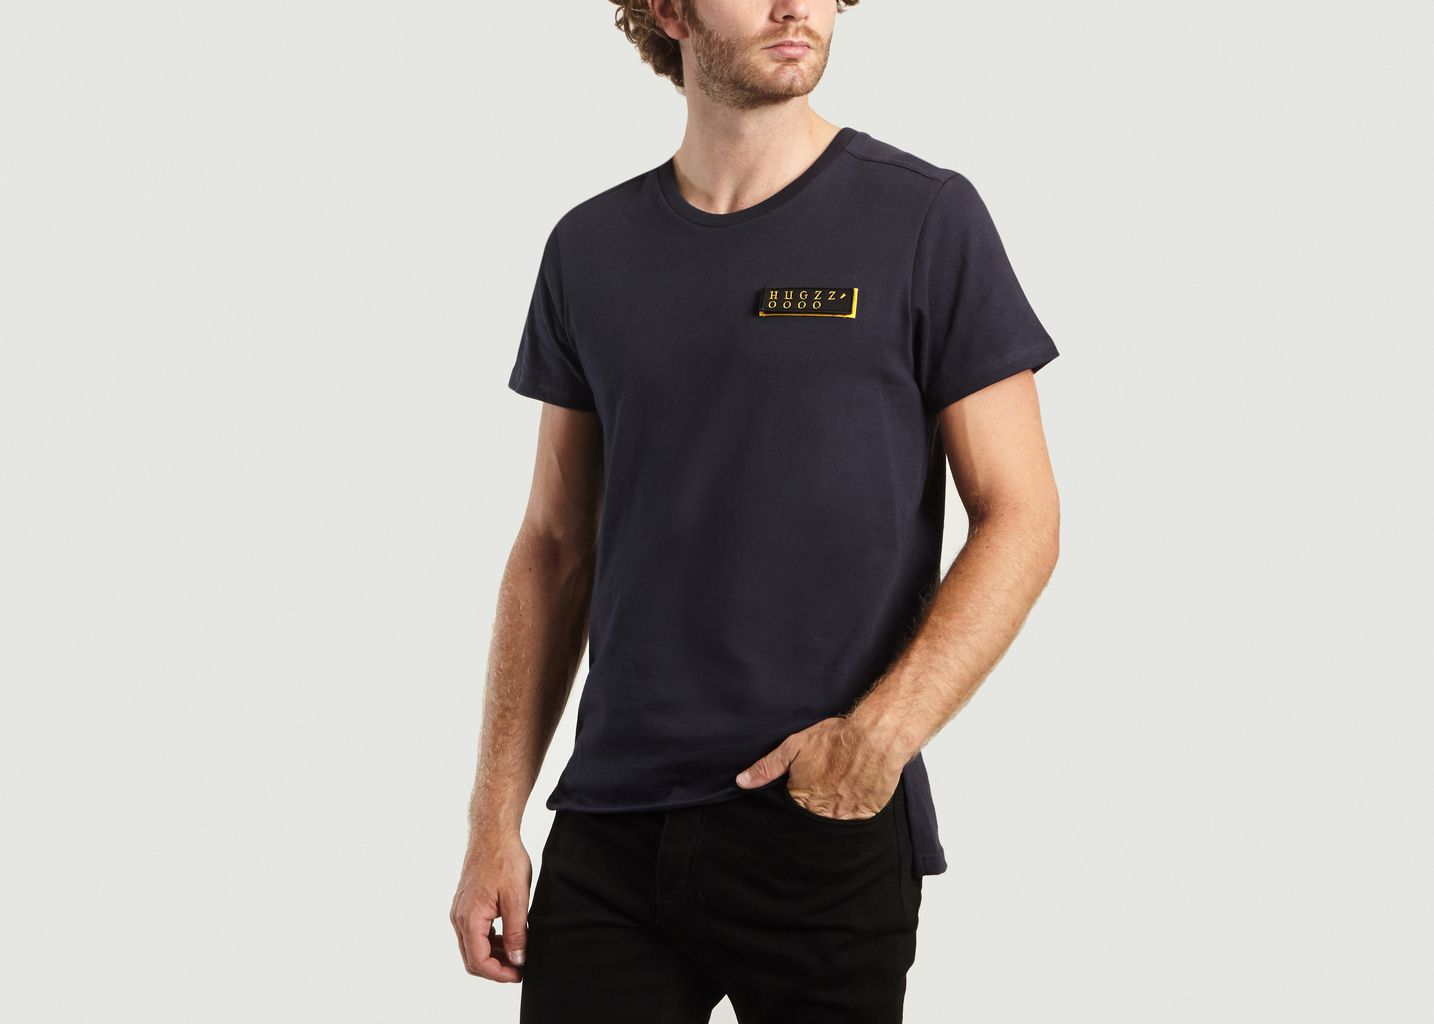 Velcro Universal Address T-shirt - GEYM